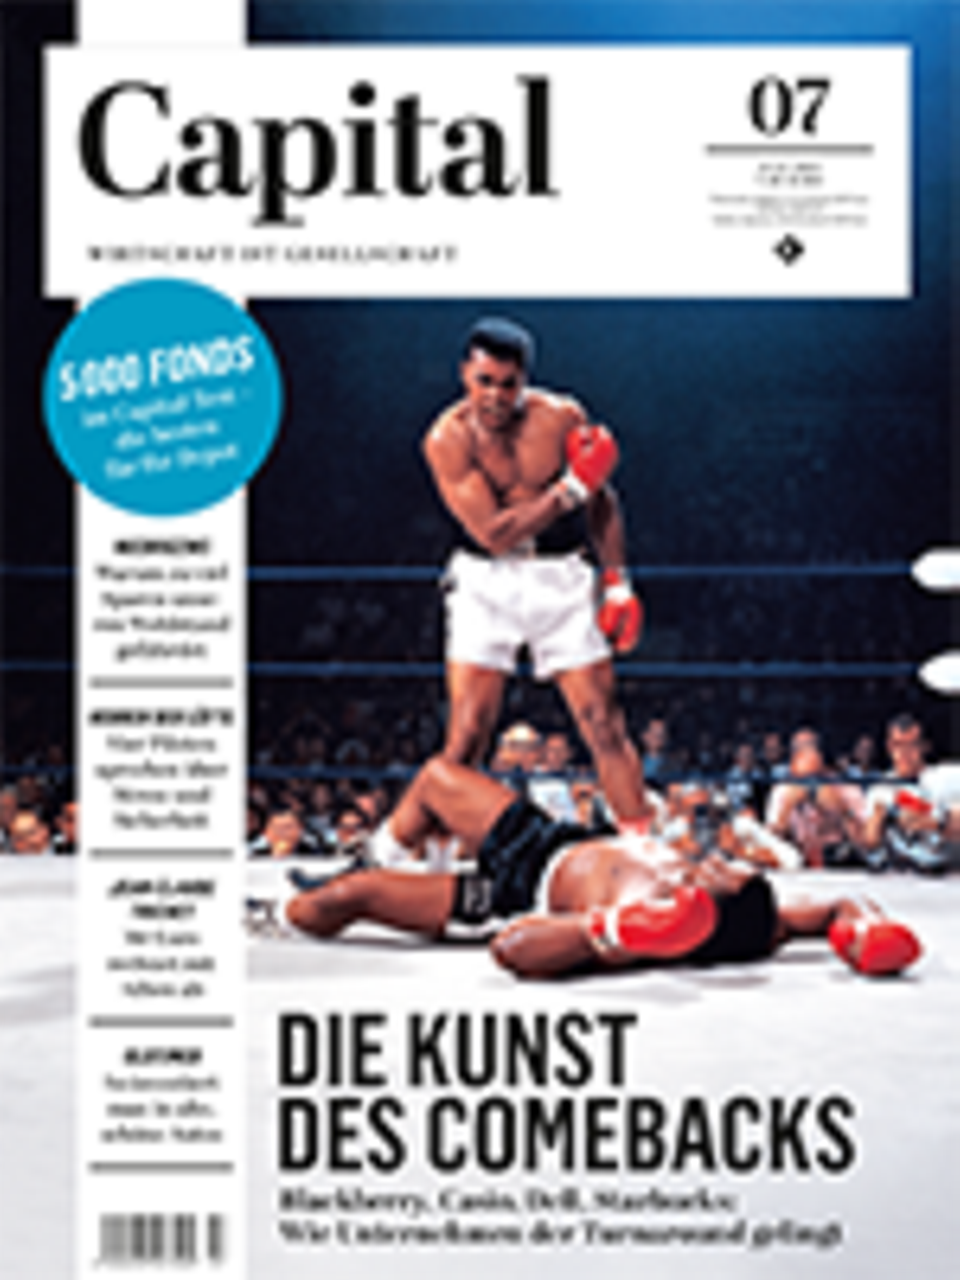 Capital, das Cover des aktuellen Magazins